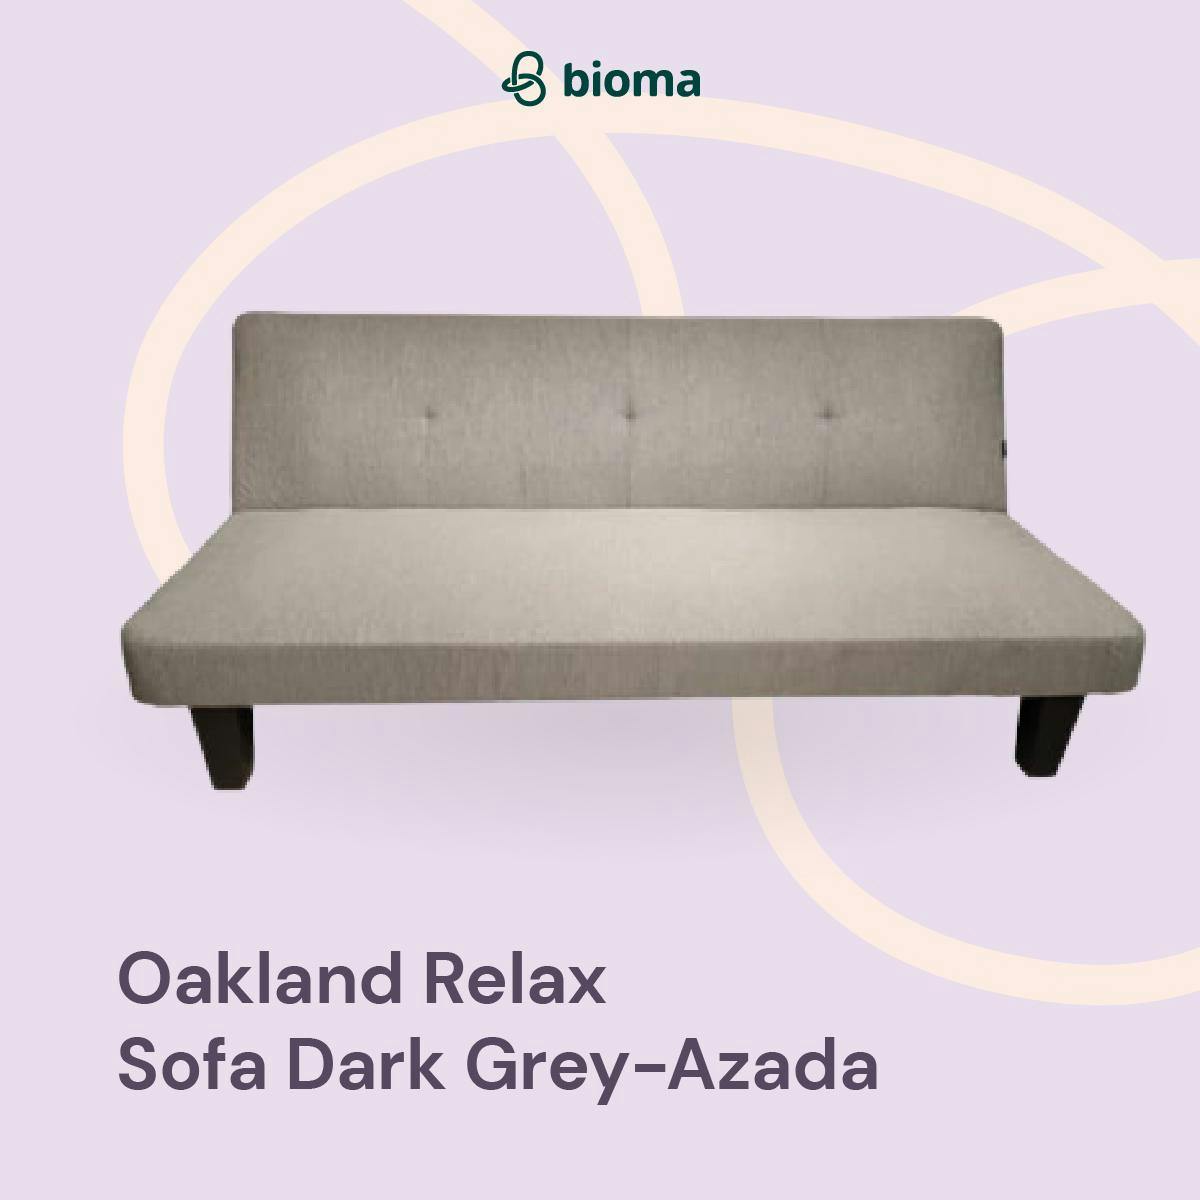 Oakland Relax Sofa